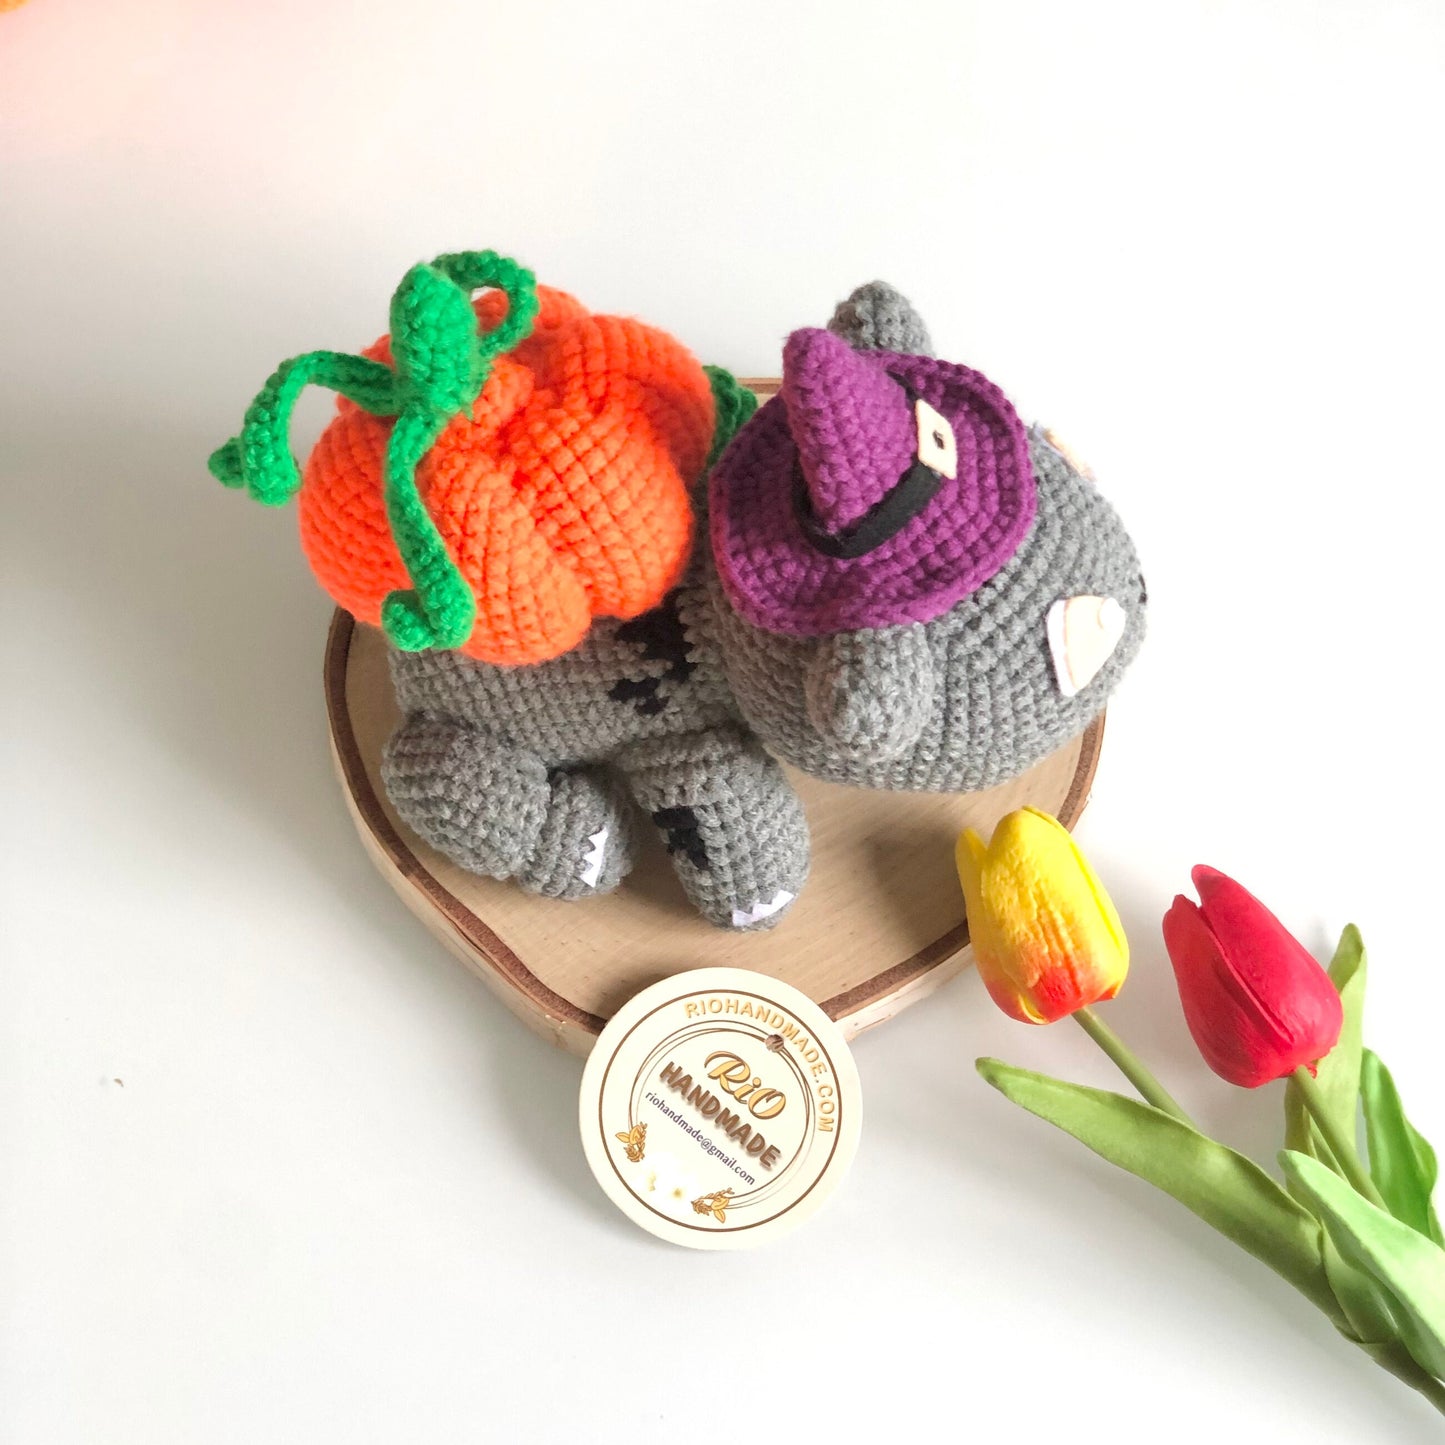 Handmade Yarn Cotton Halloween Bulbasaur Inspired Pumpkin, Amigurumi Toy, cute, toy for baby, toddler, kid, adult hobby